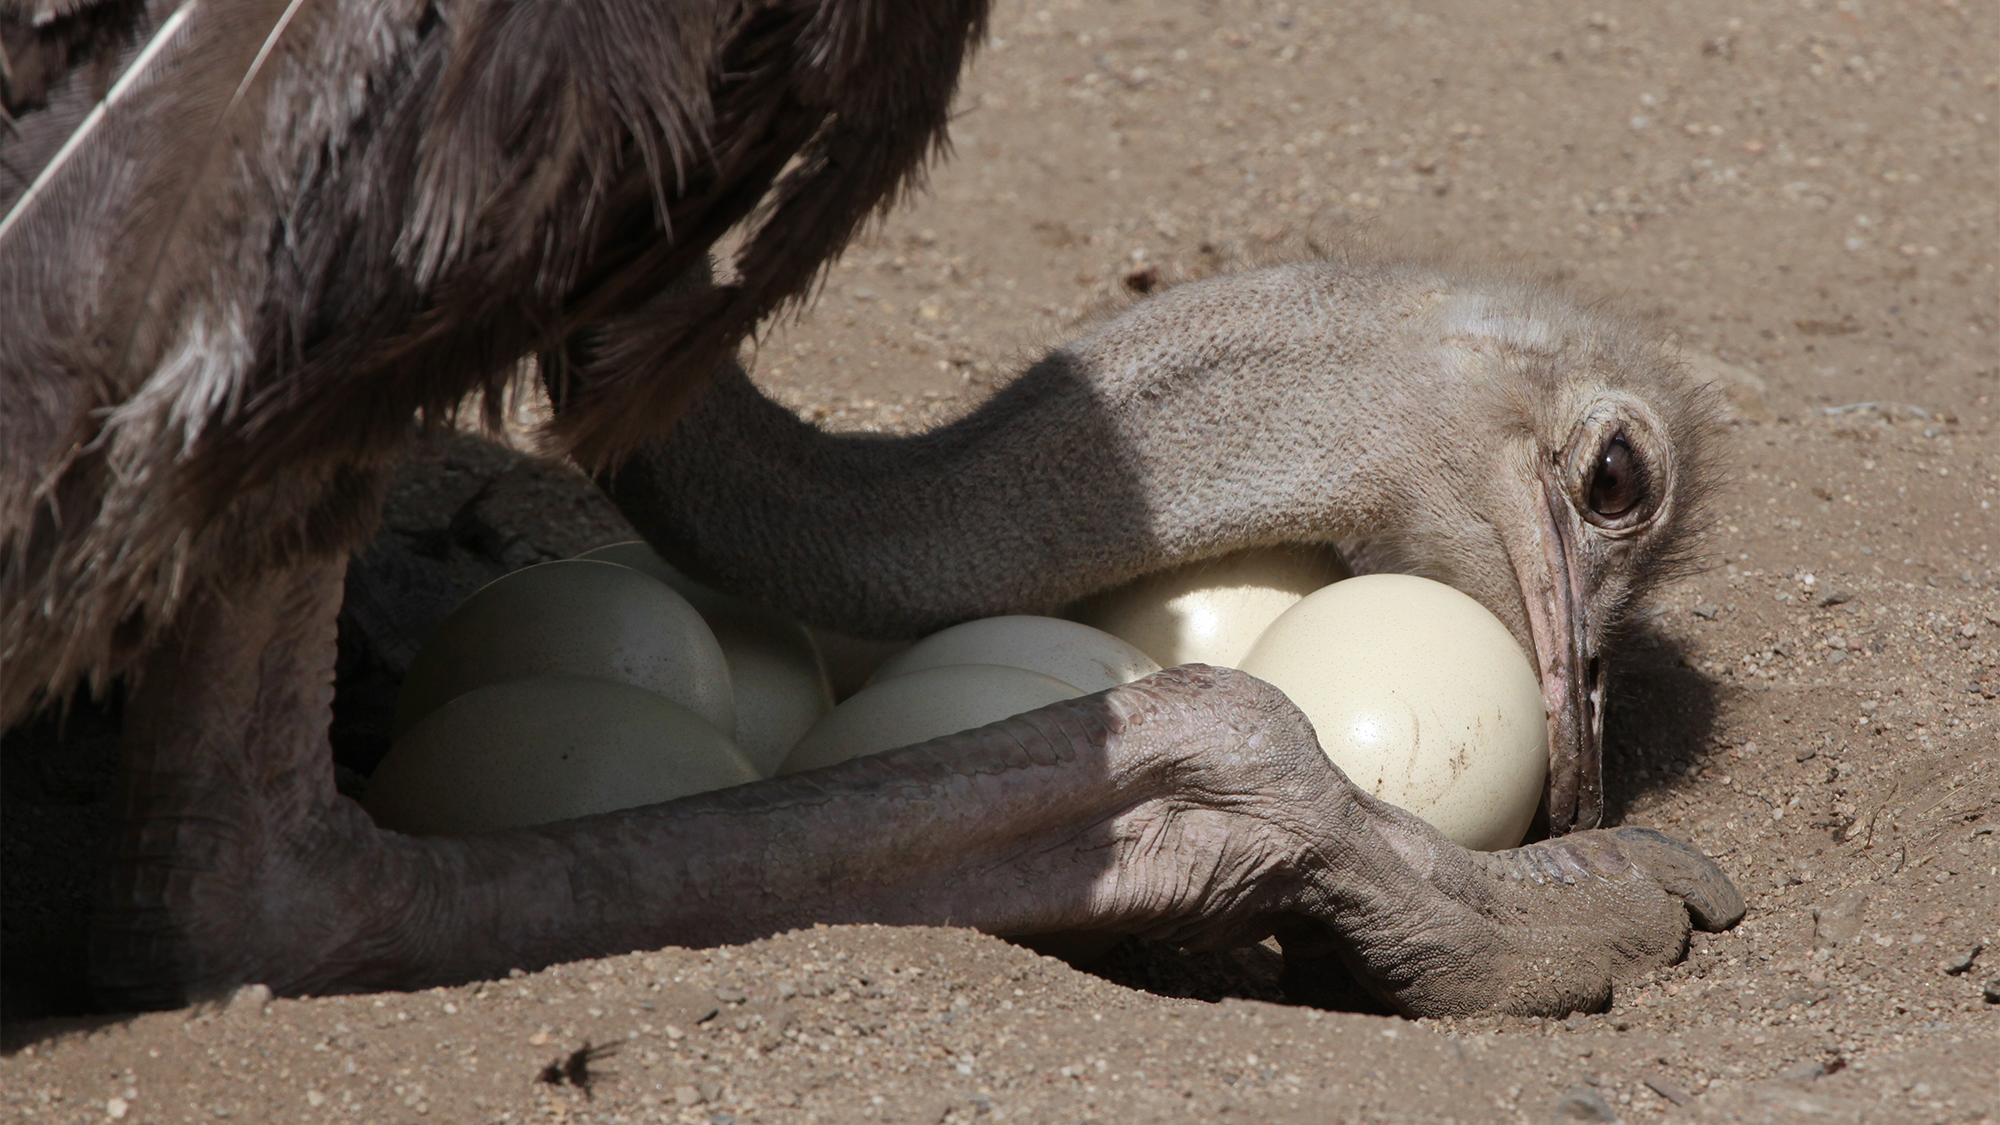 An ostrich inspects eggs in a nest.